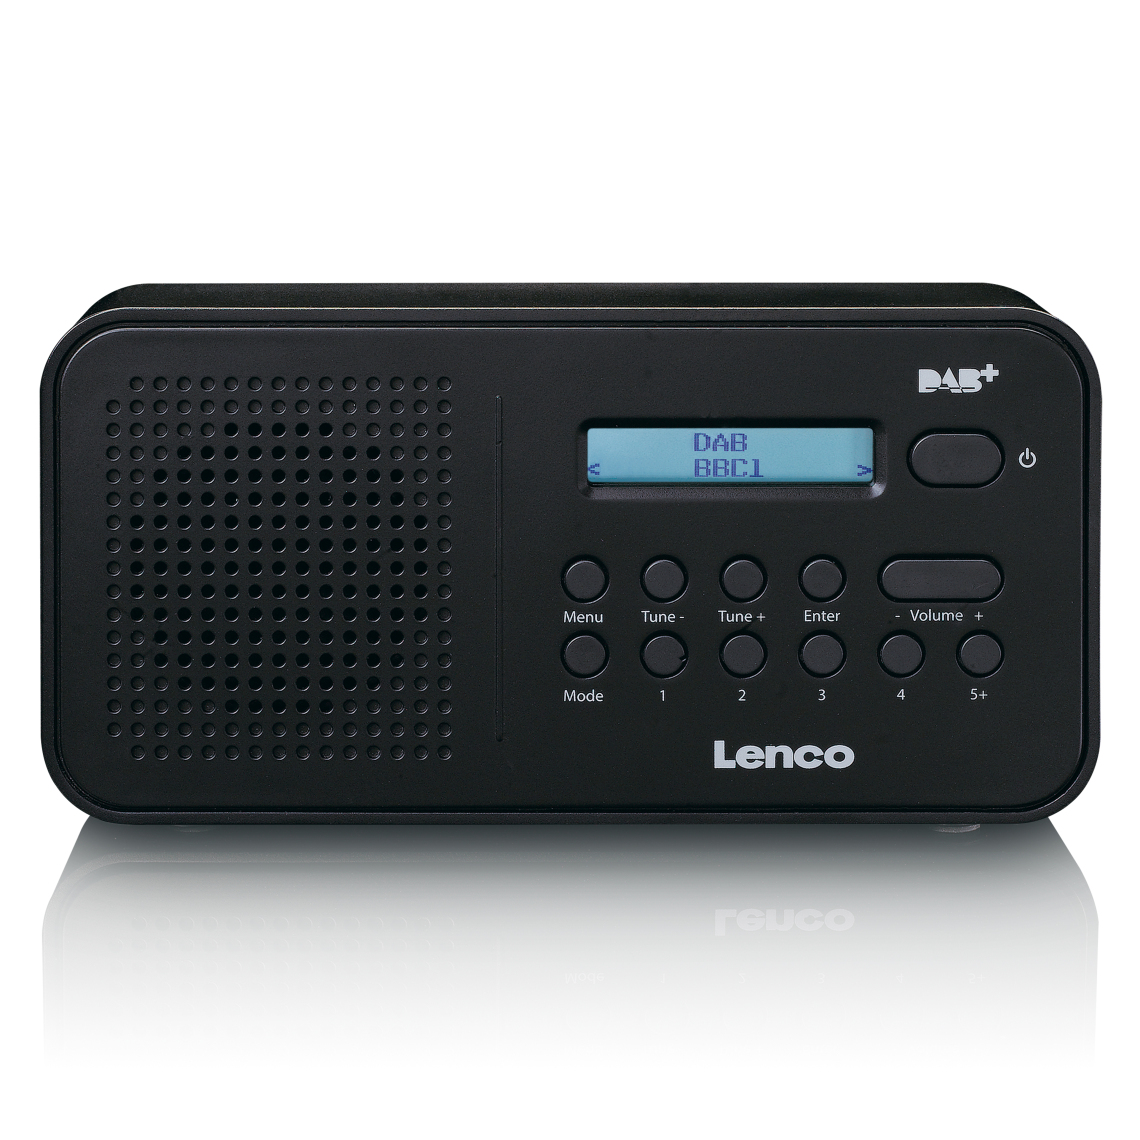 Lenco - Radio portable FM DAB+ PDR-015BK Noir - Radio